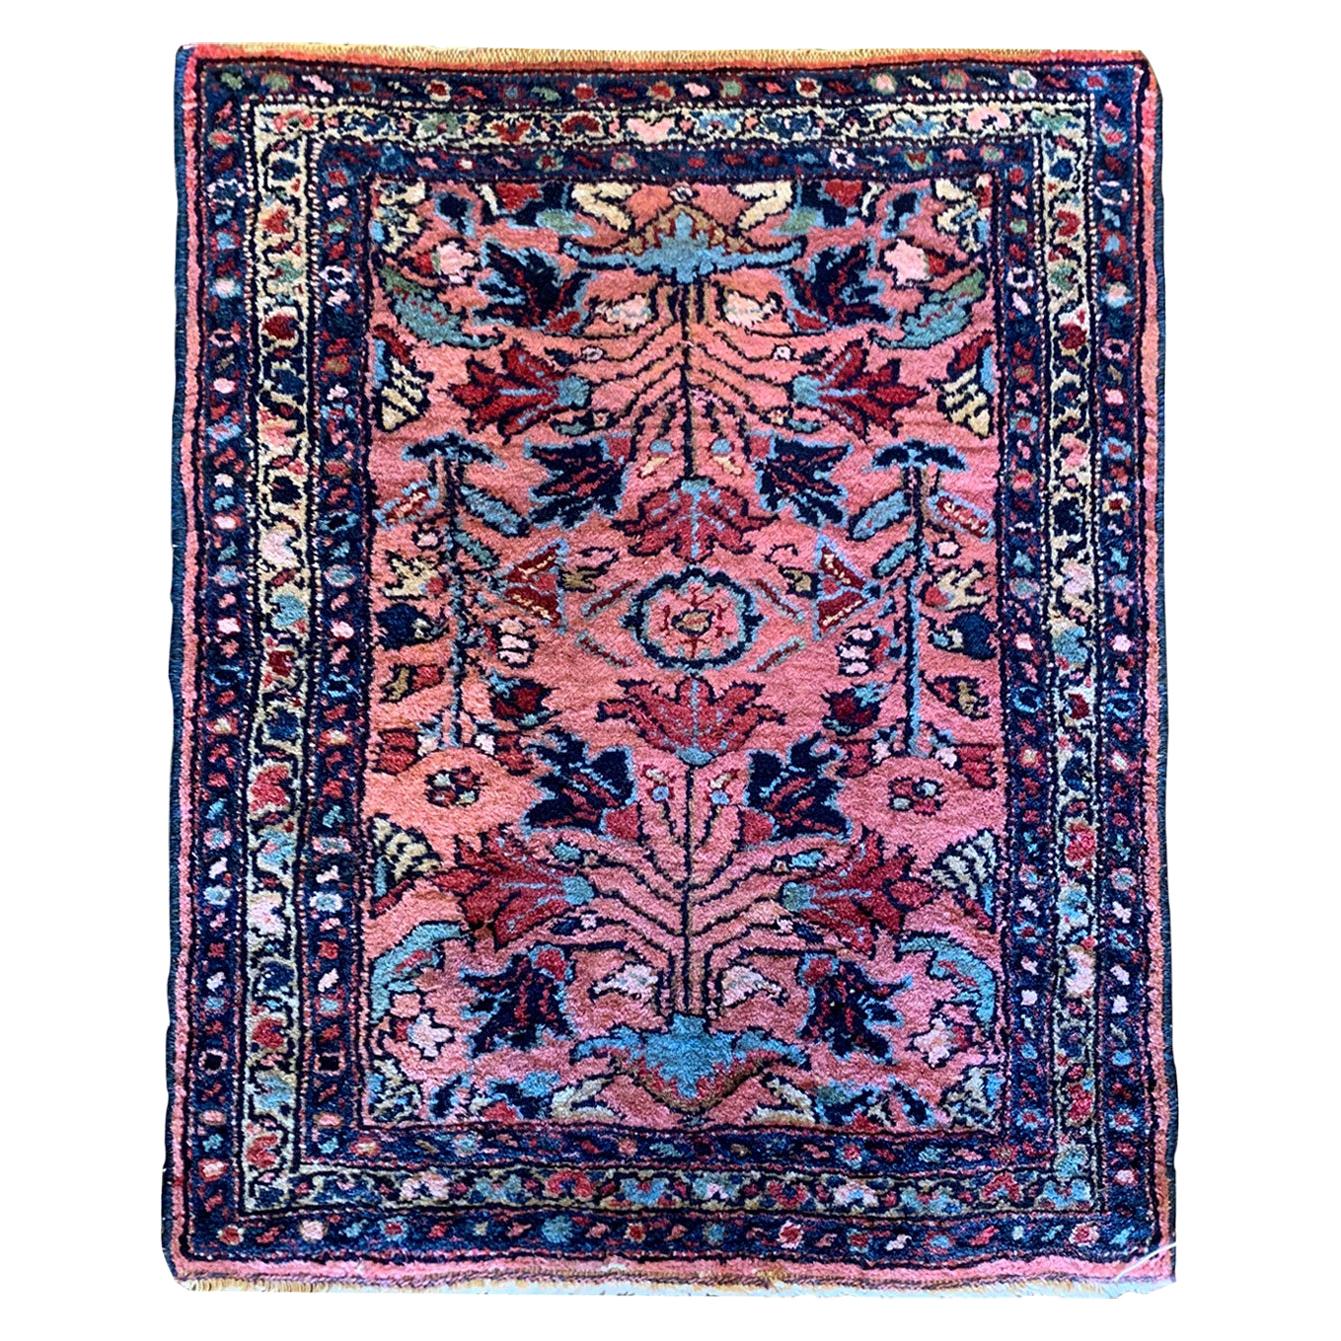 Small Antique Rug, Pink Handmade Azerbaijan Oriental Wool Carpet